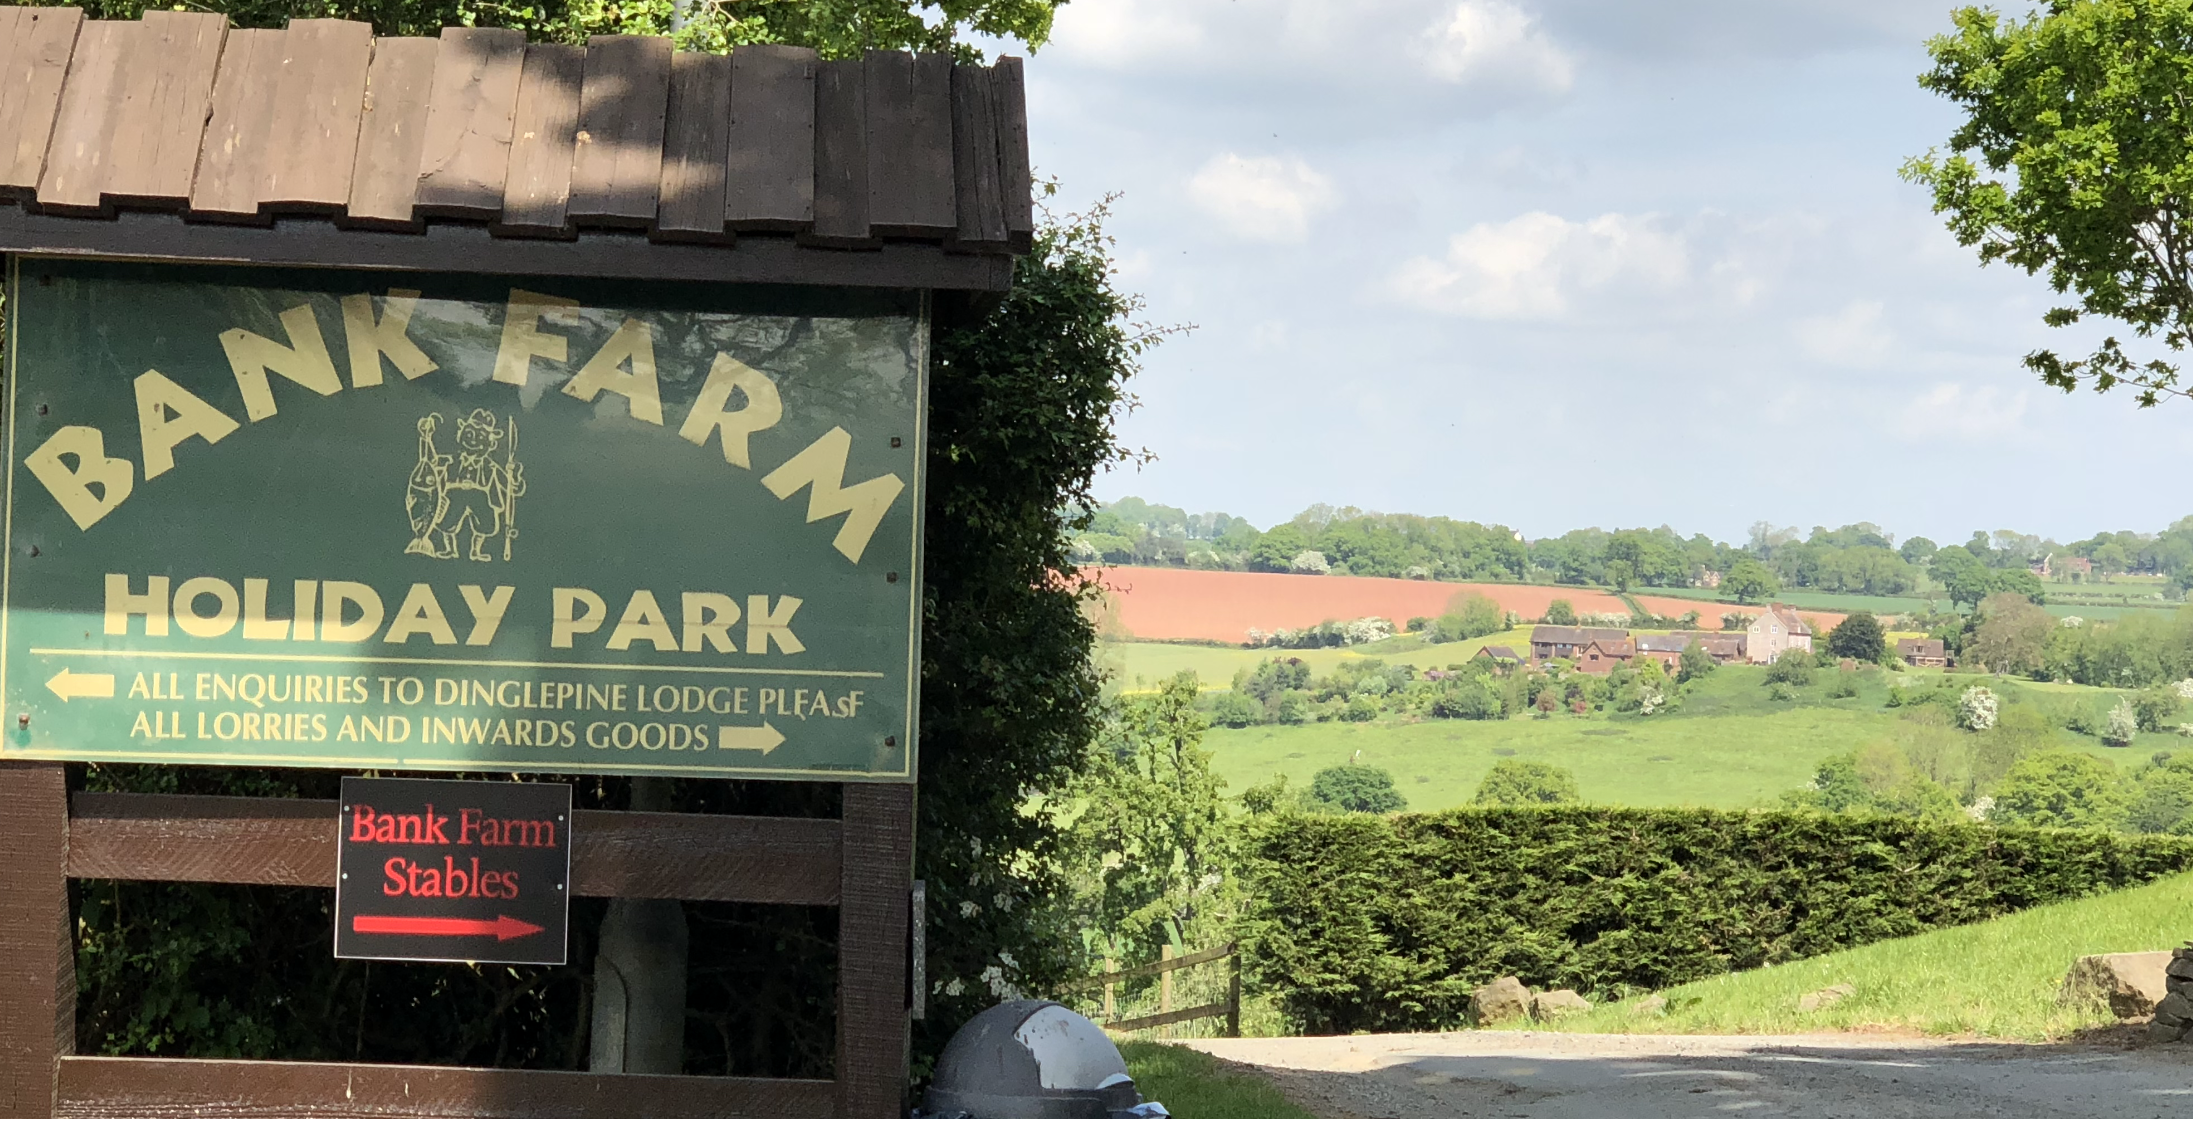 Bank Farm Holiday Park Sign.